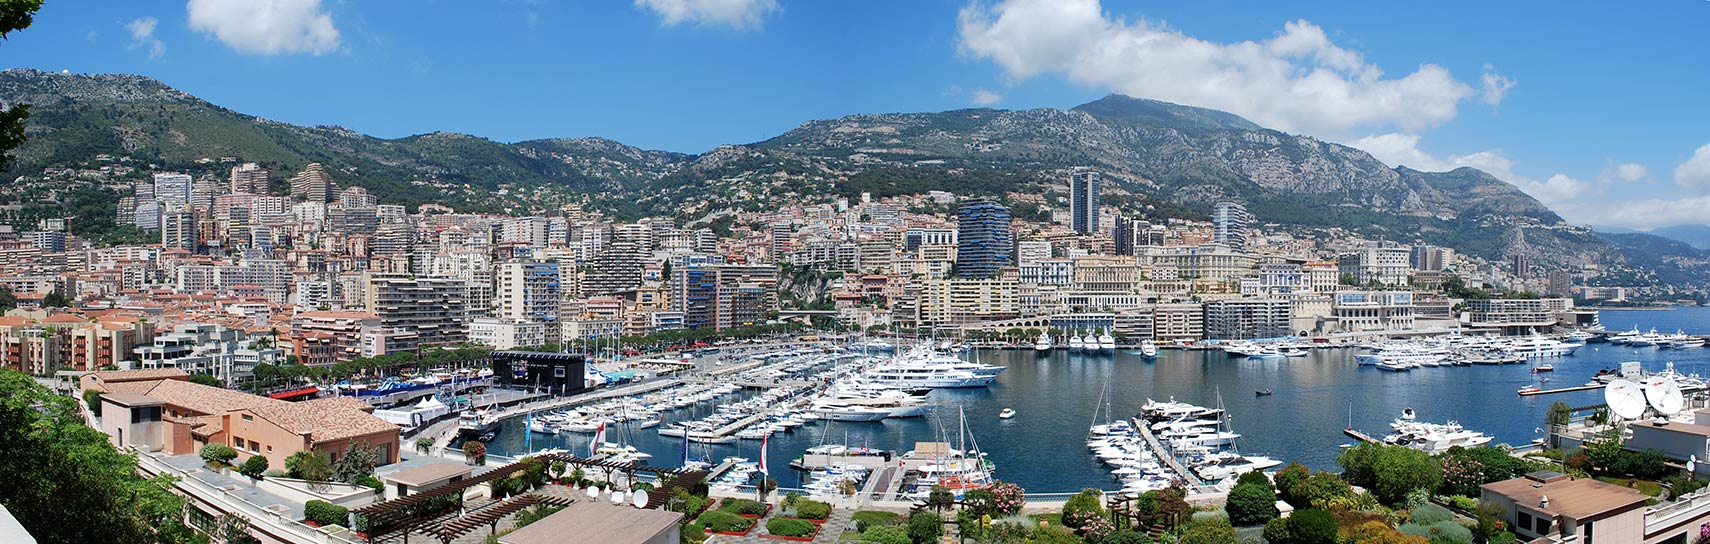 La Condamine with Port Hercules, Monaco